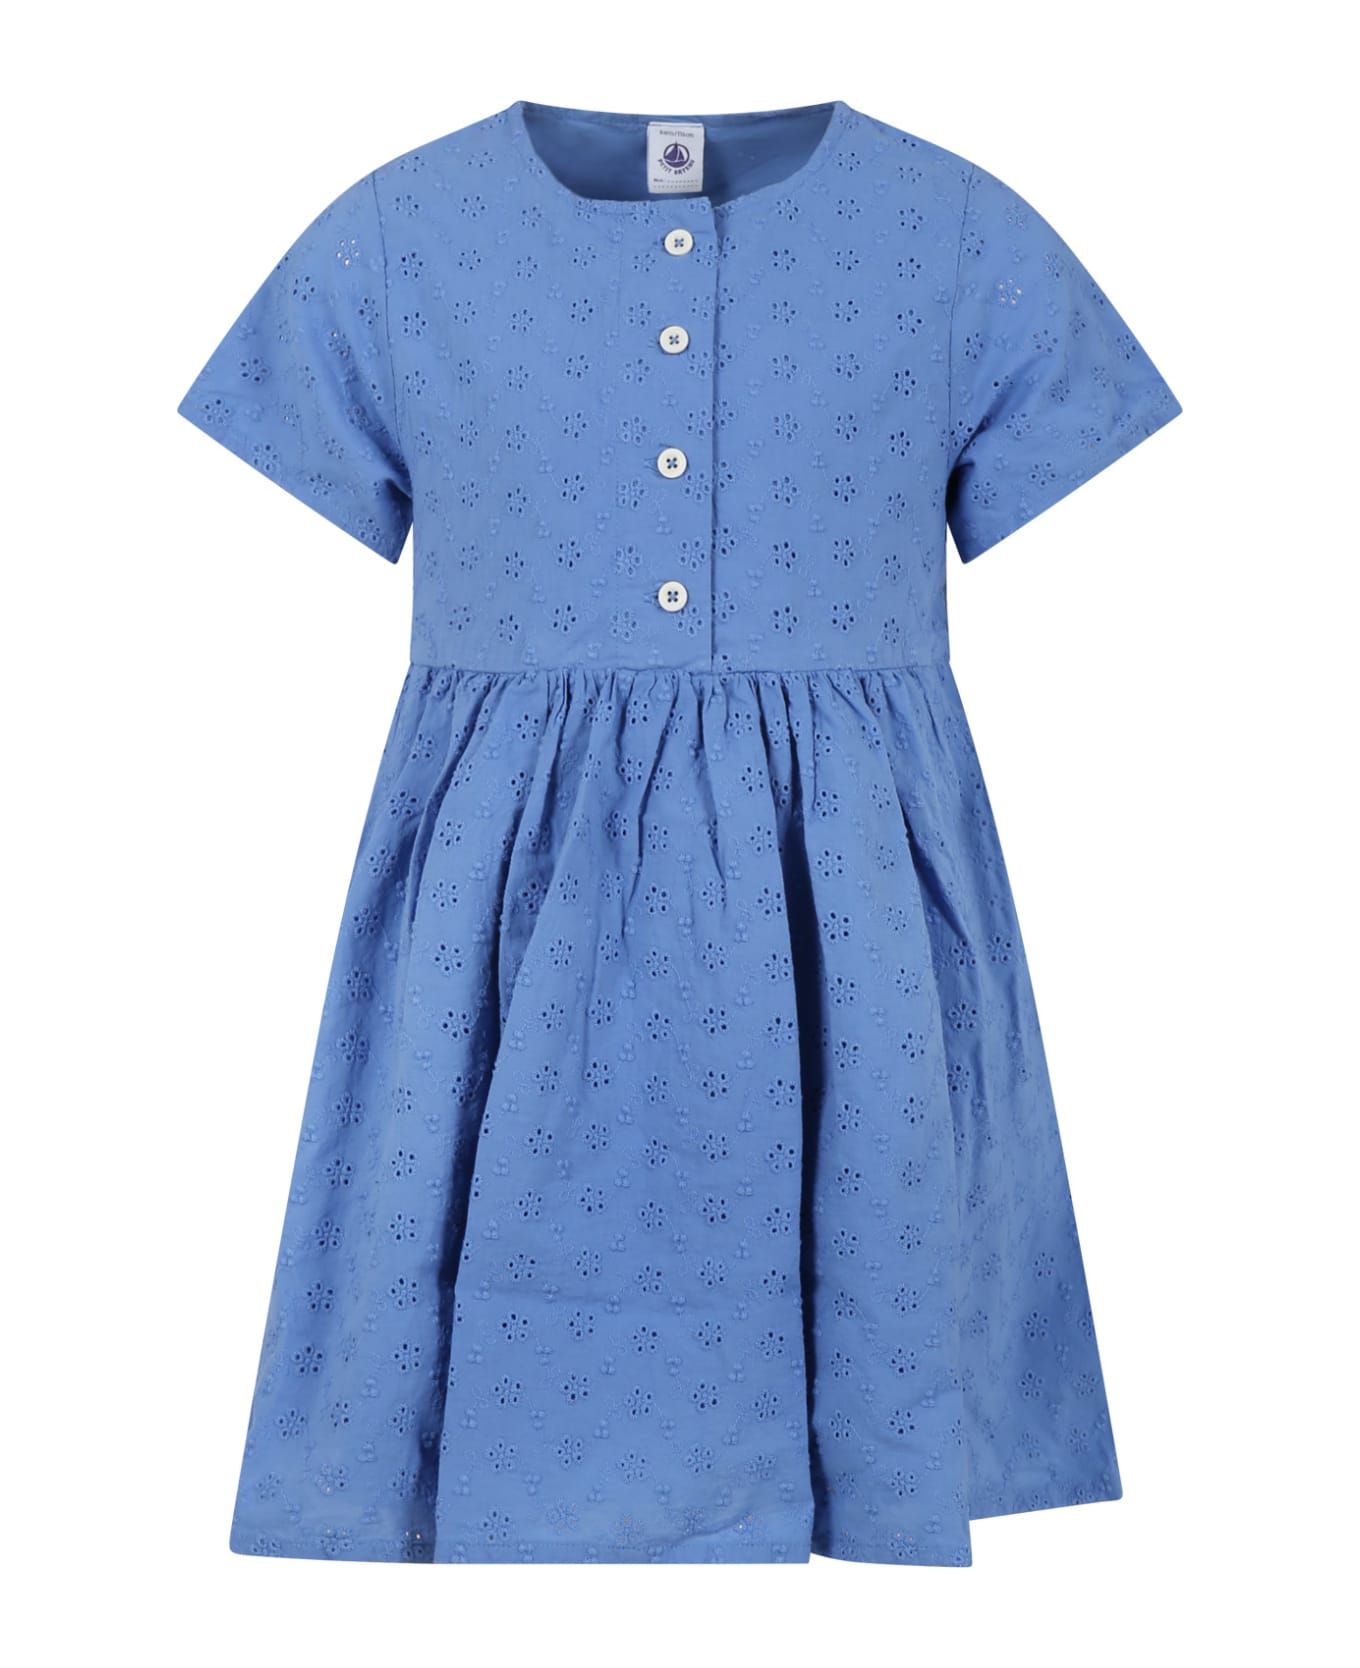 Petit Bateau Light Blue Dress For Girl - Light Blue